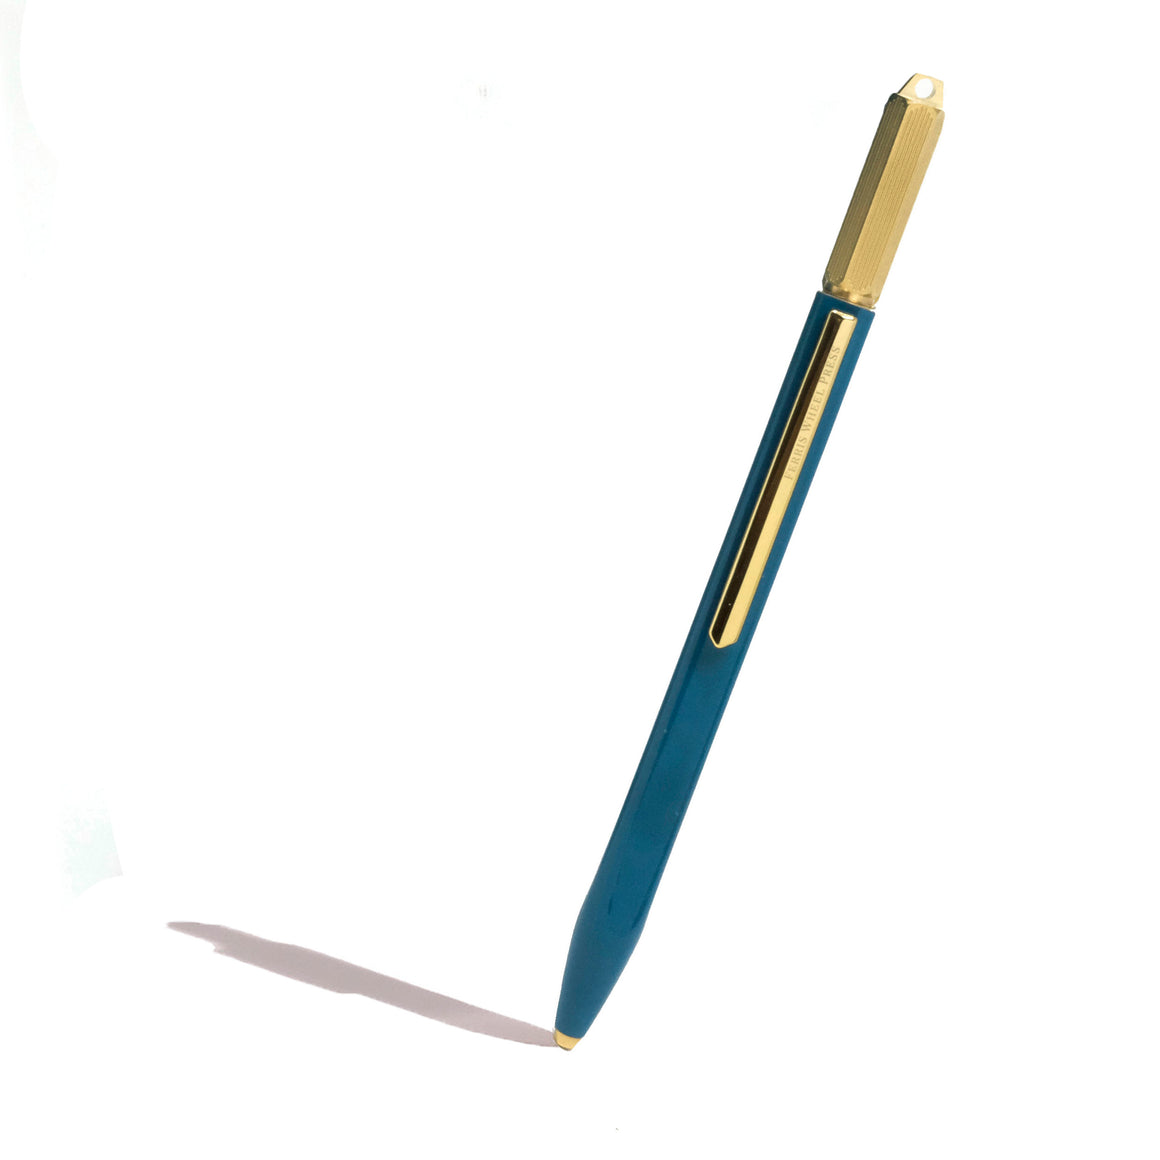 The Scribe ballpoint pen in French Vanilla